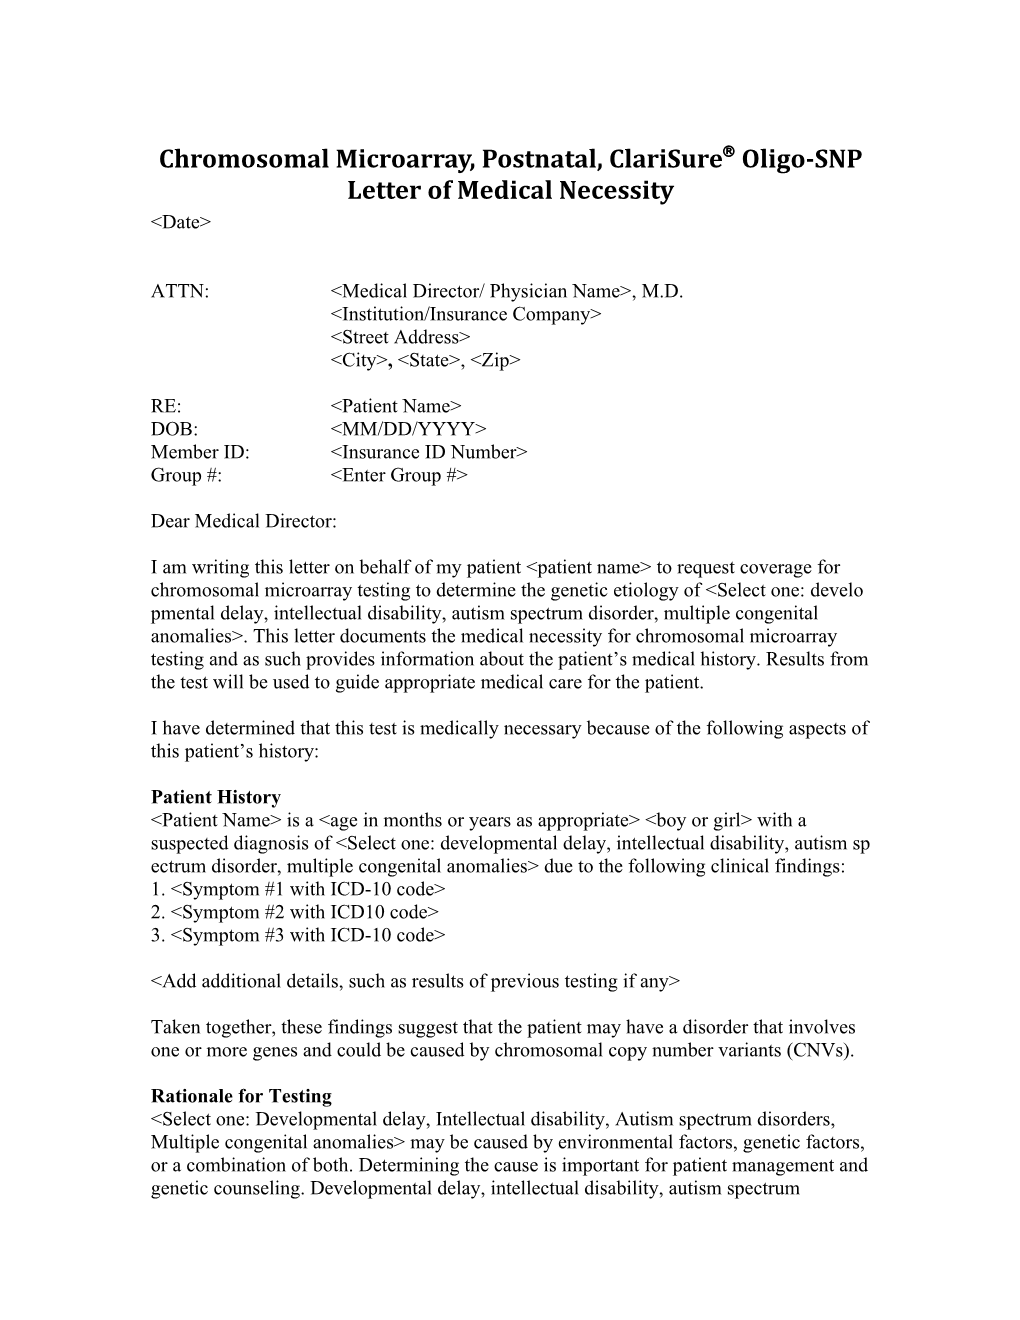 Chromosomal Microarray, Postnatal, Clarisureâ Oligo-SNP Letter of Medical Necessity